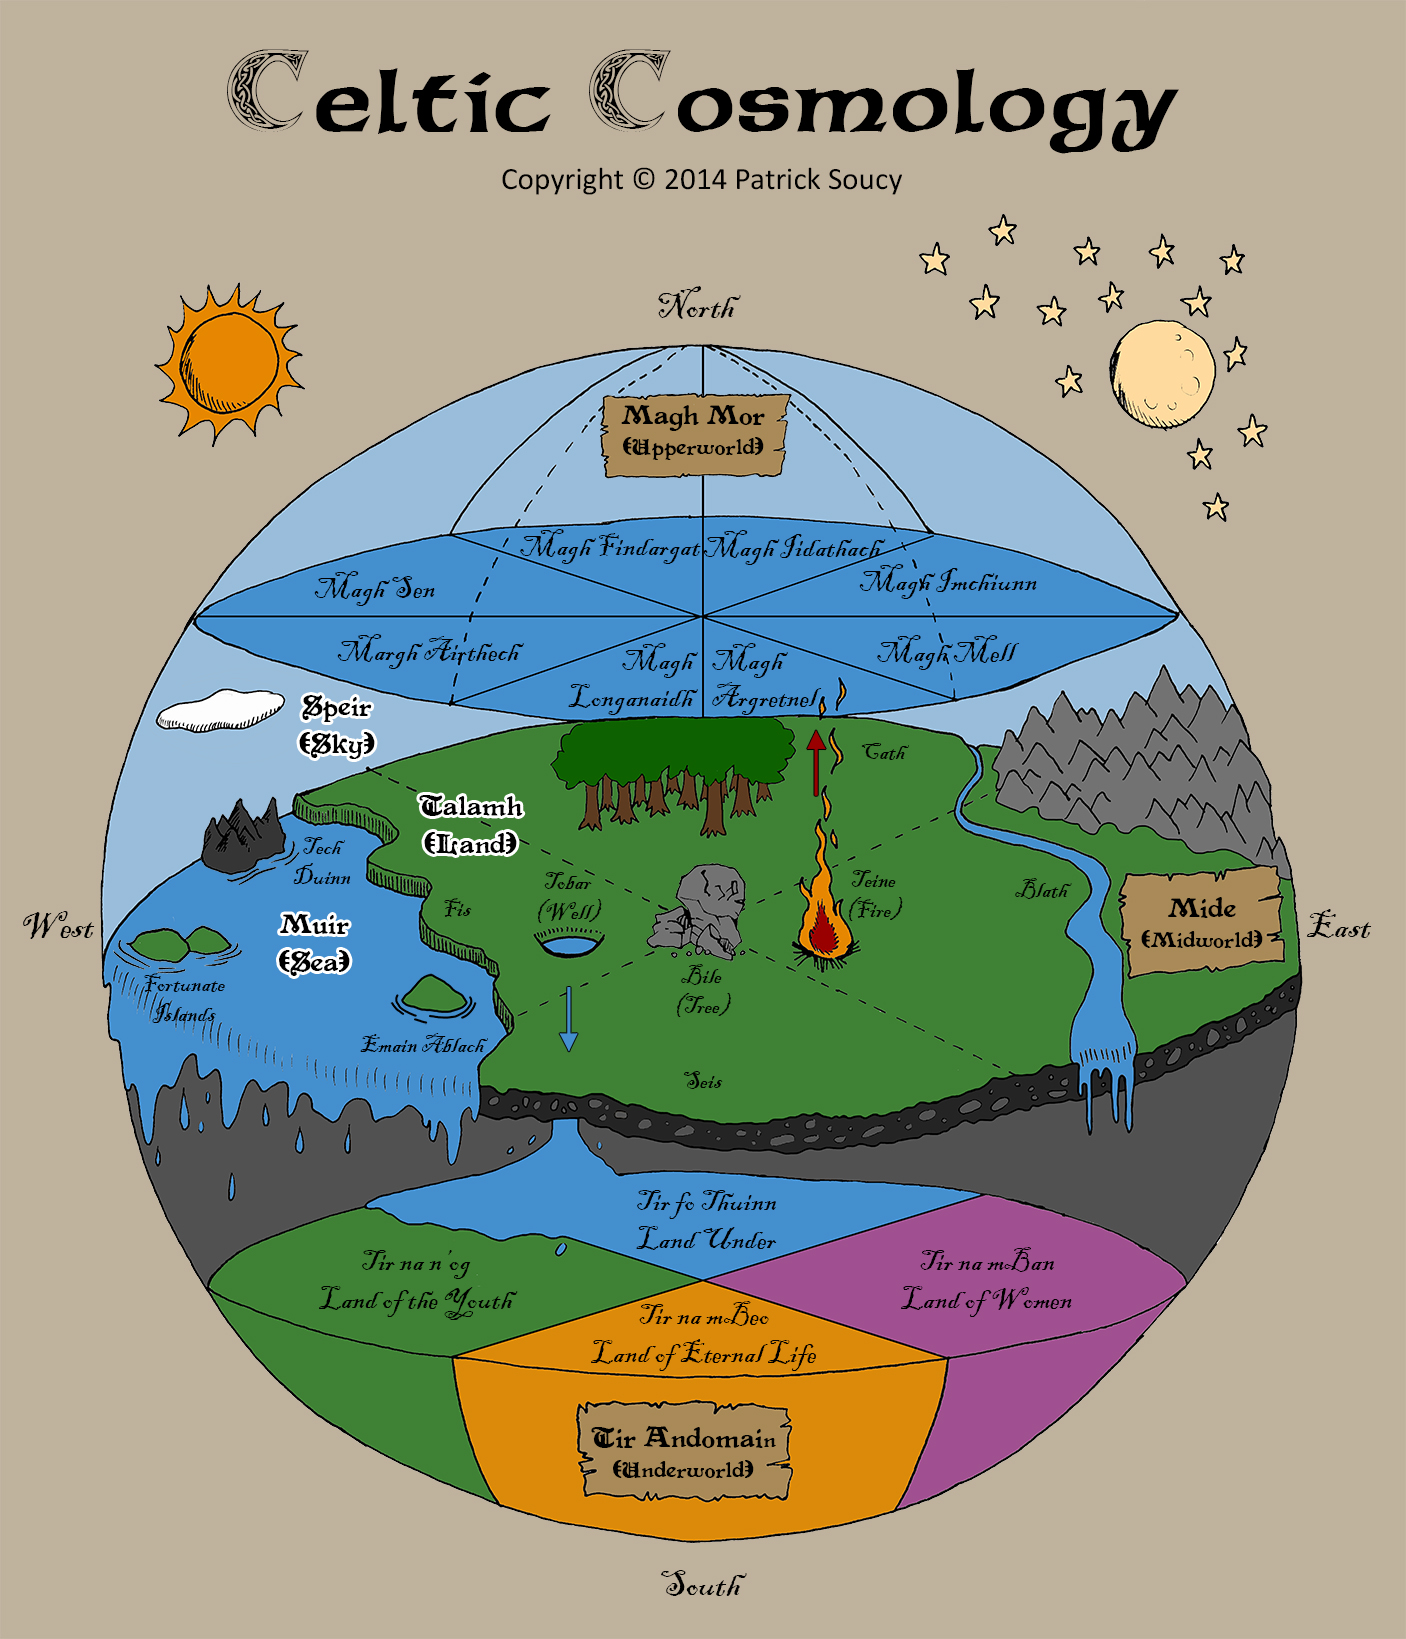 Celtic Cosmology